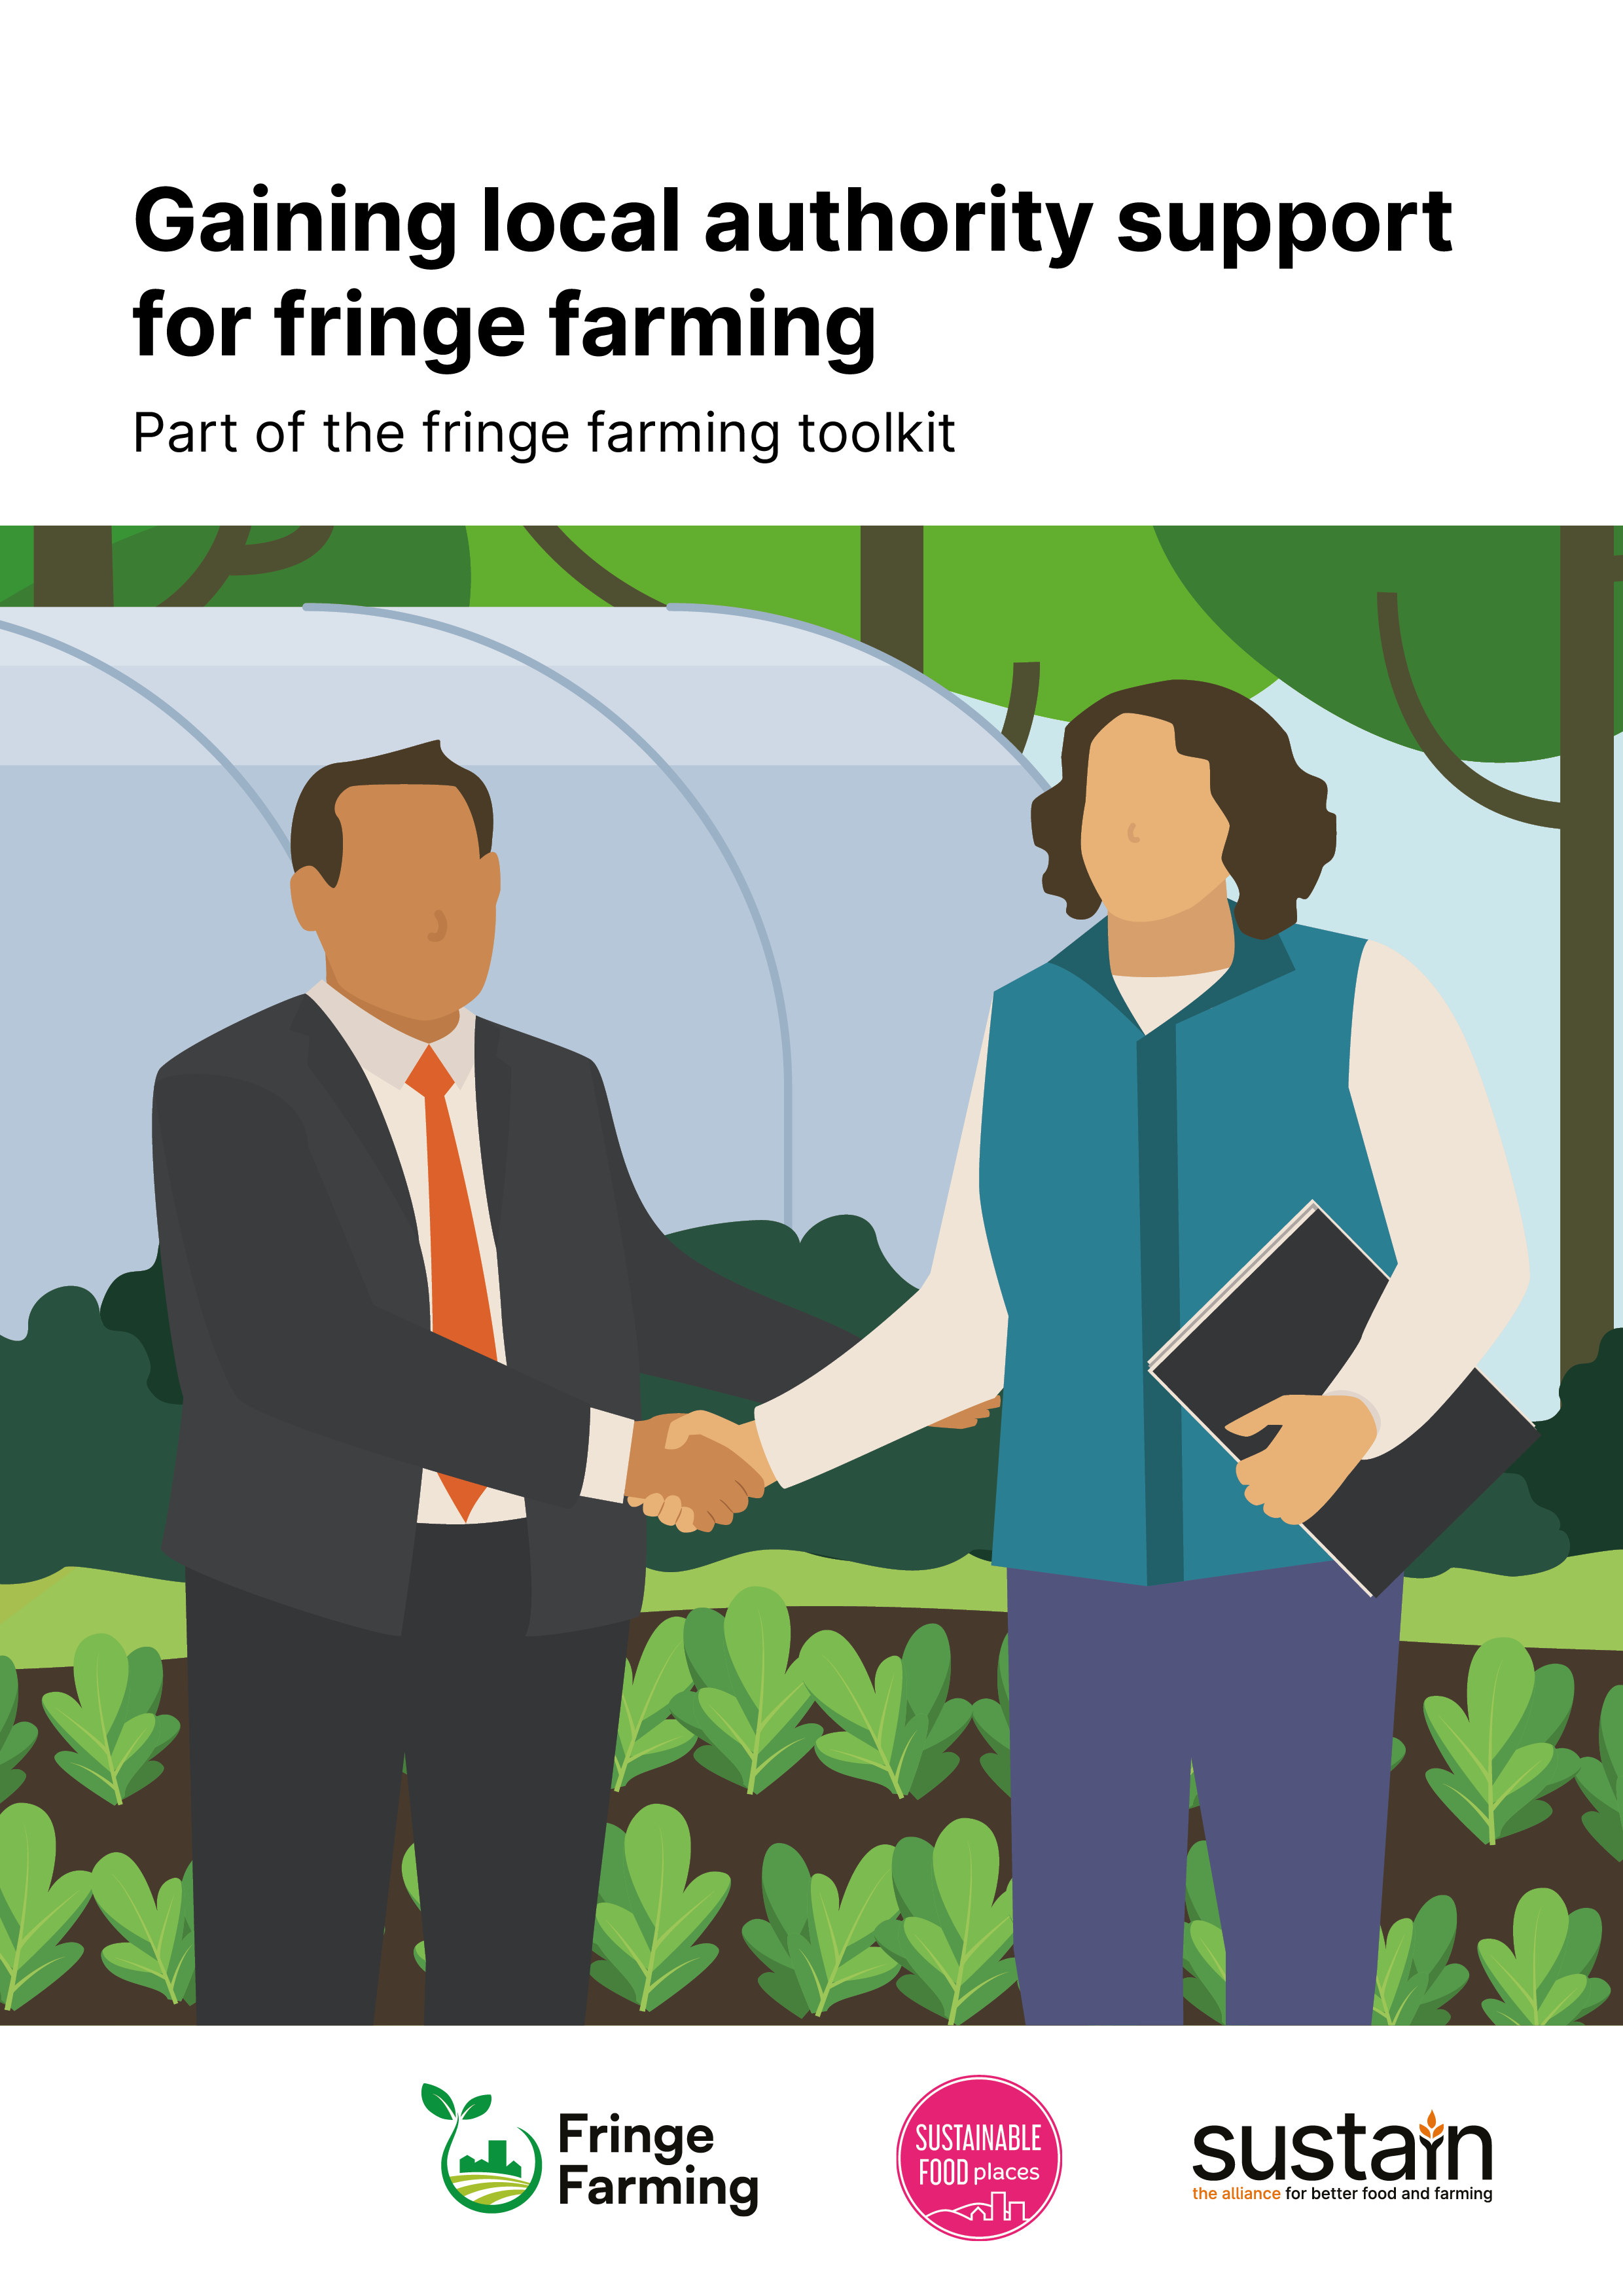 The fringe farming toolkit 4. Credit: Sustain